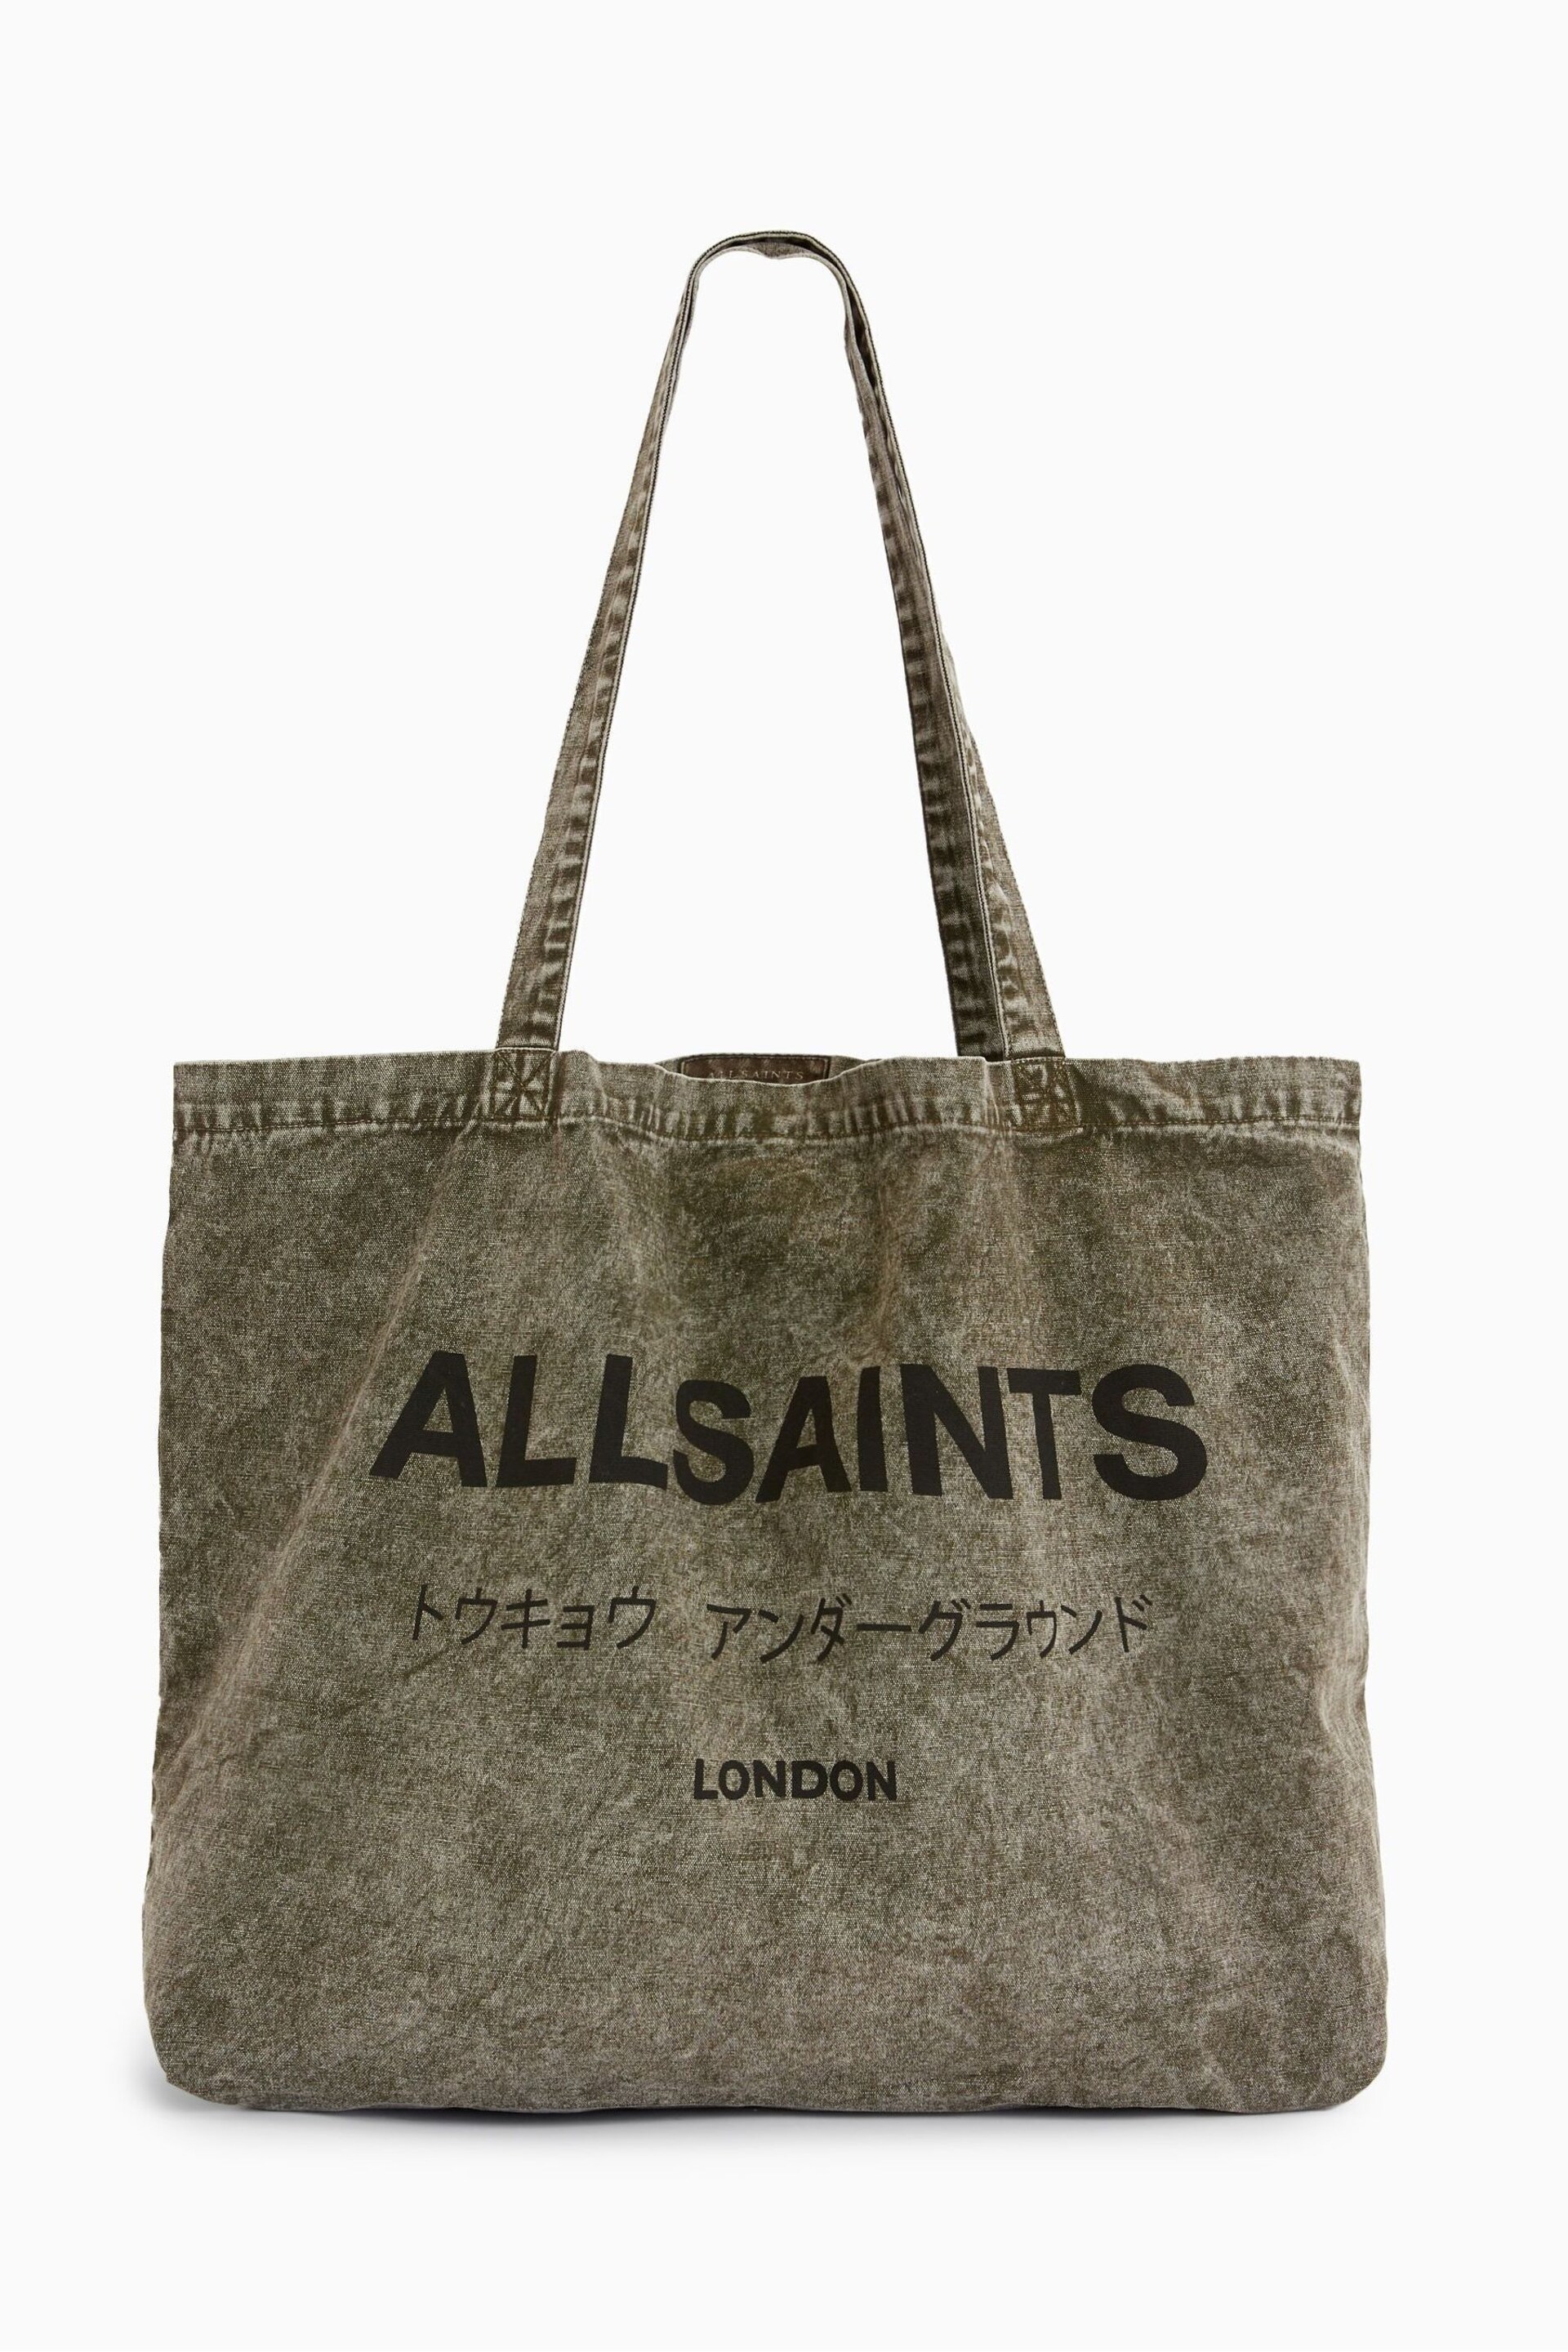 AllSaints Black Underground ACI Tote Bag - Image 2 of 6